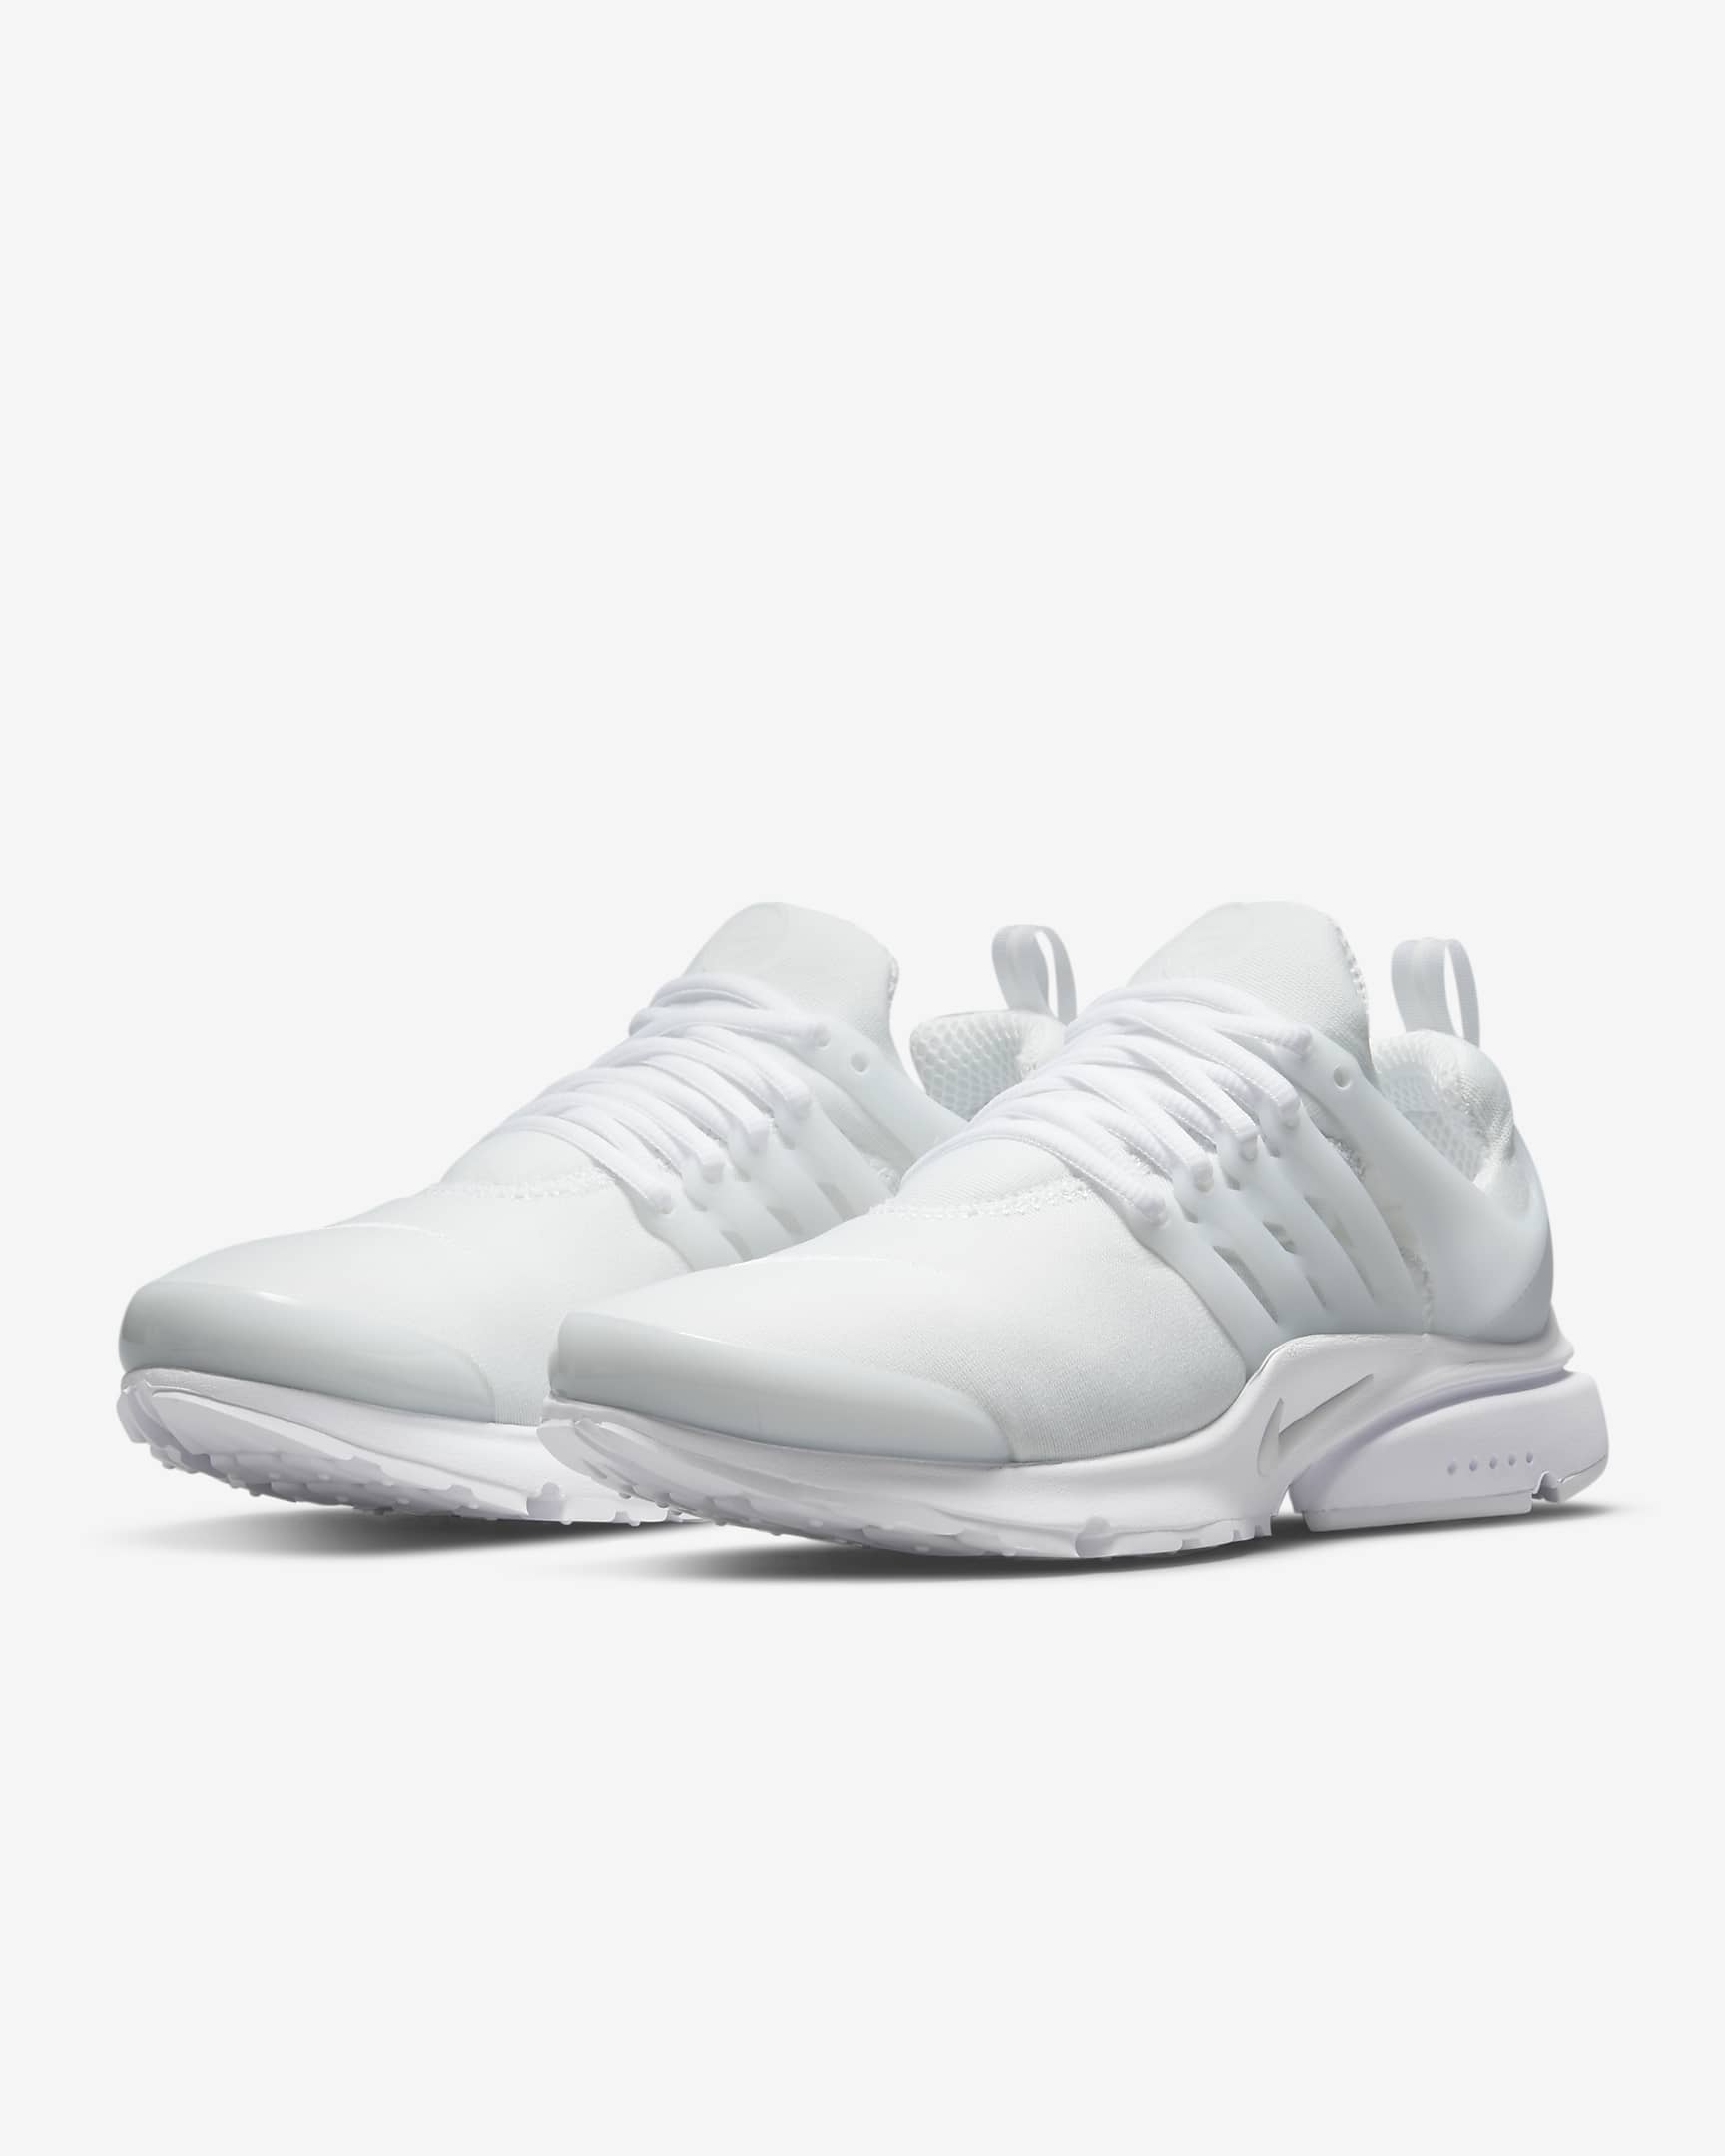 Nike Air Presto Men's Shoes - White/Pure Platinum